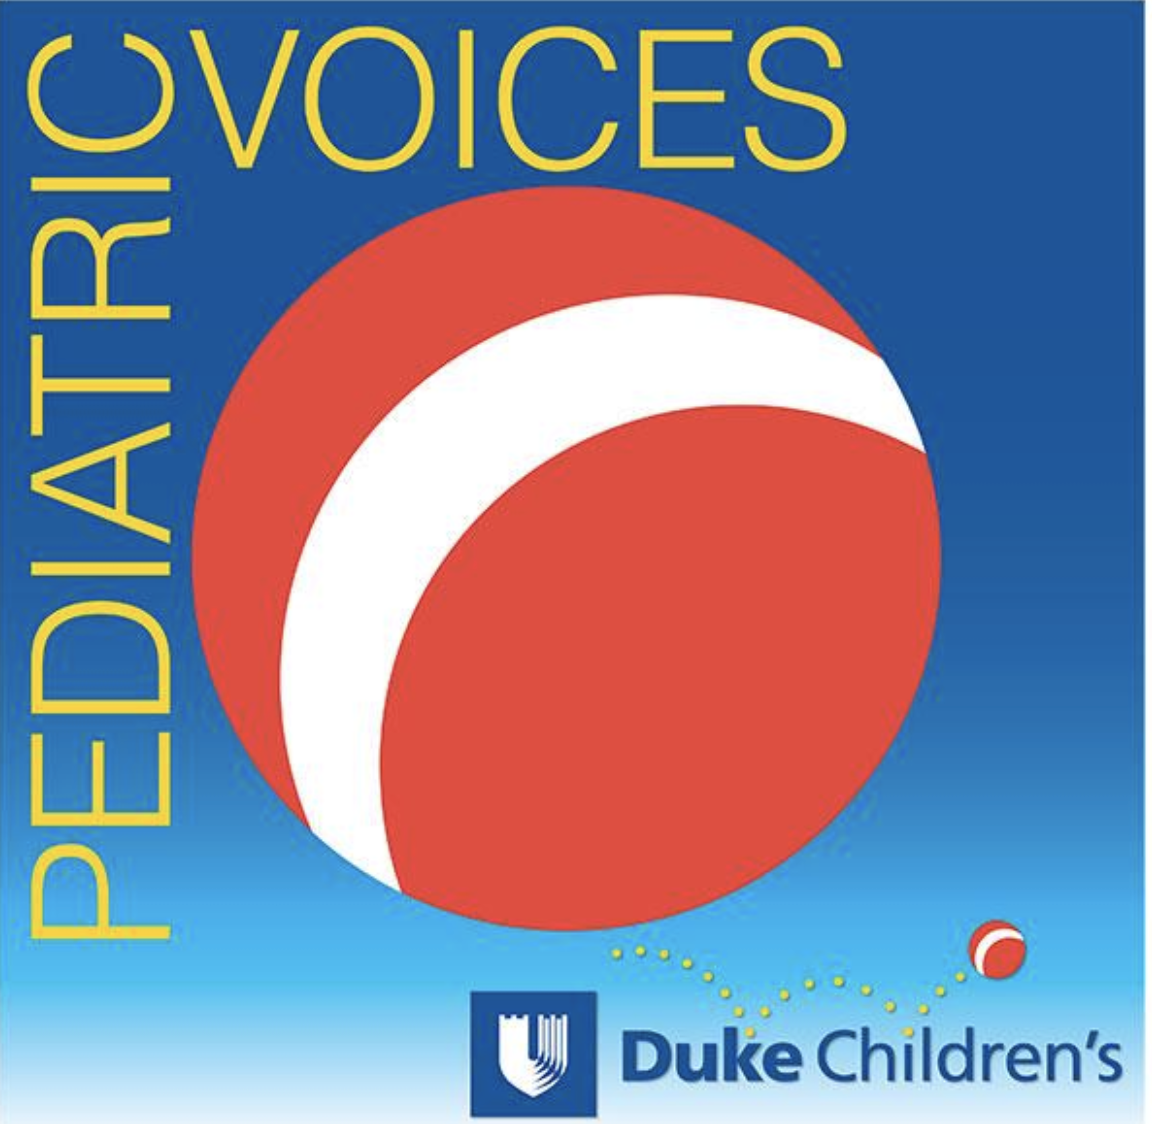 Pediatric Voices Podcast provided by Duke Children's